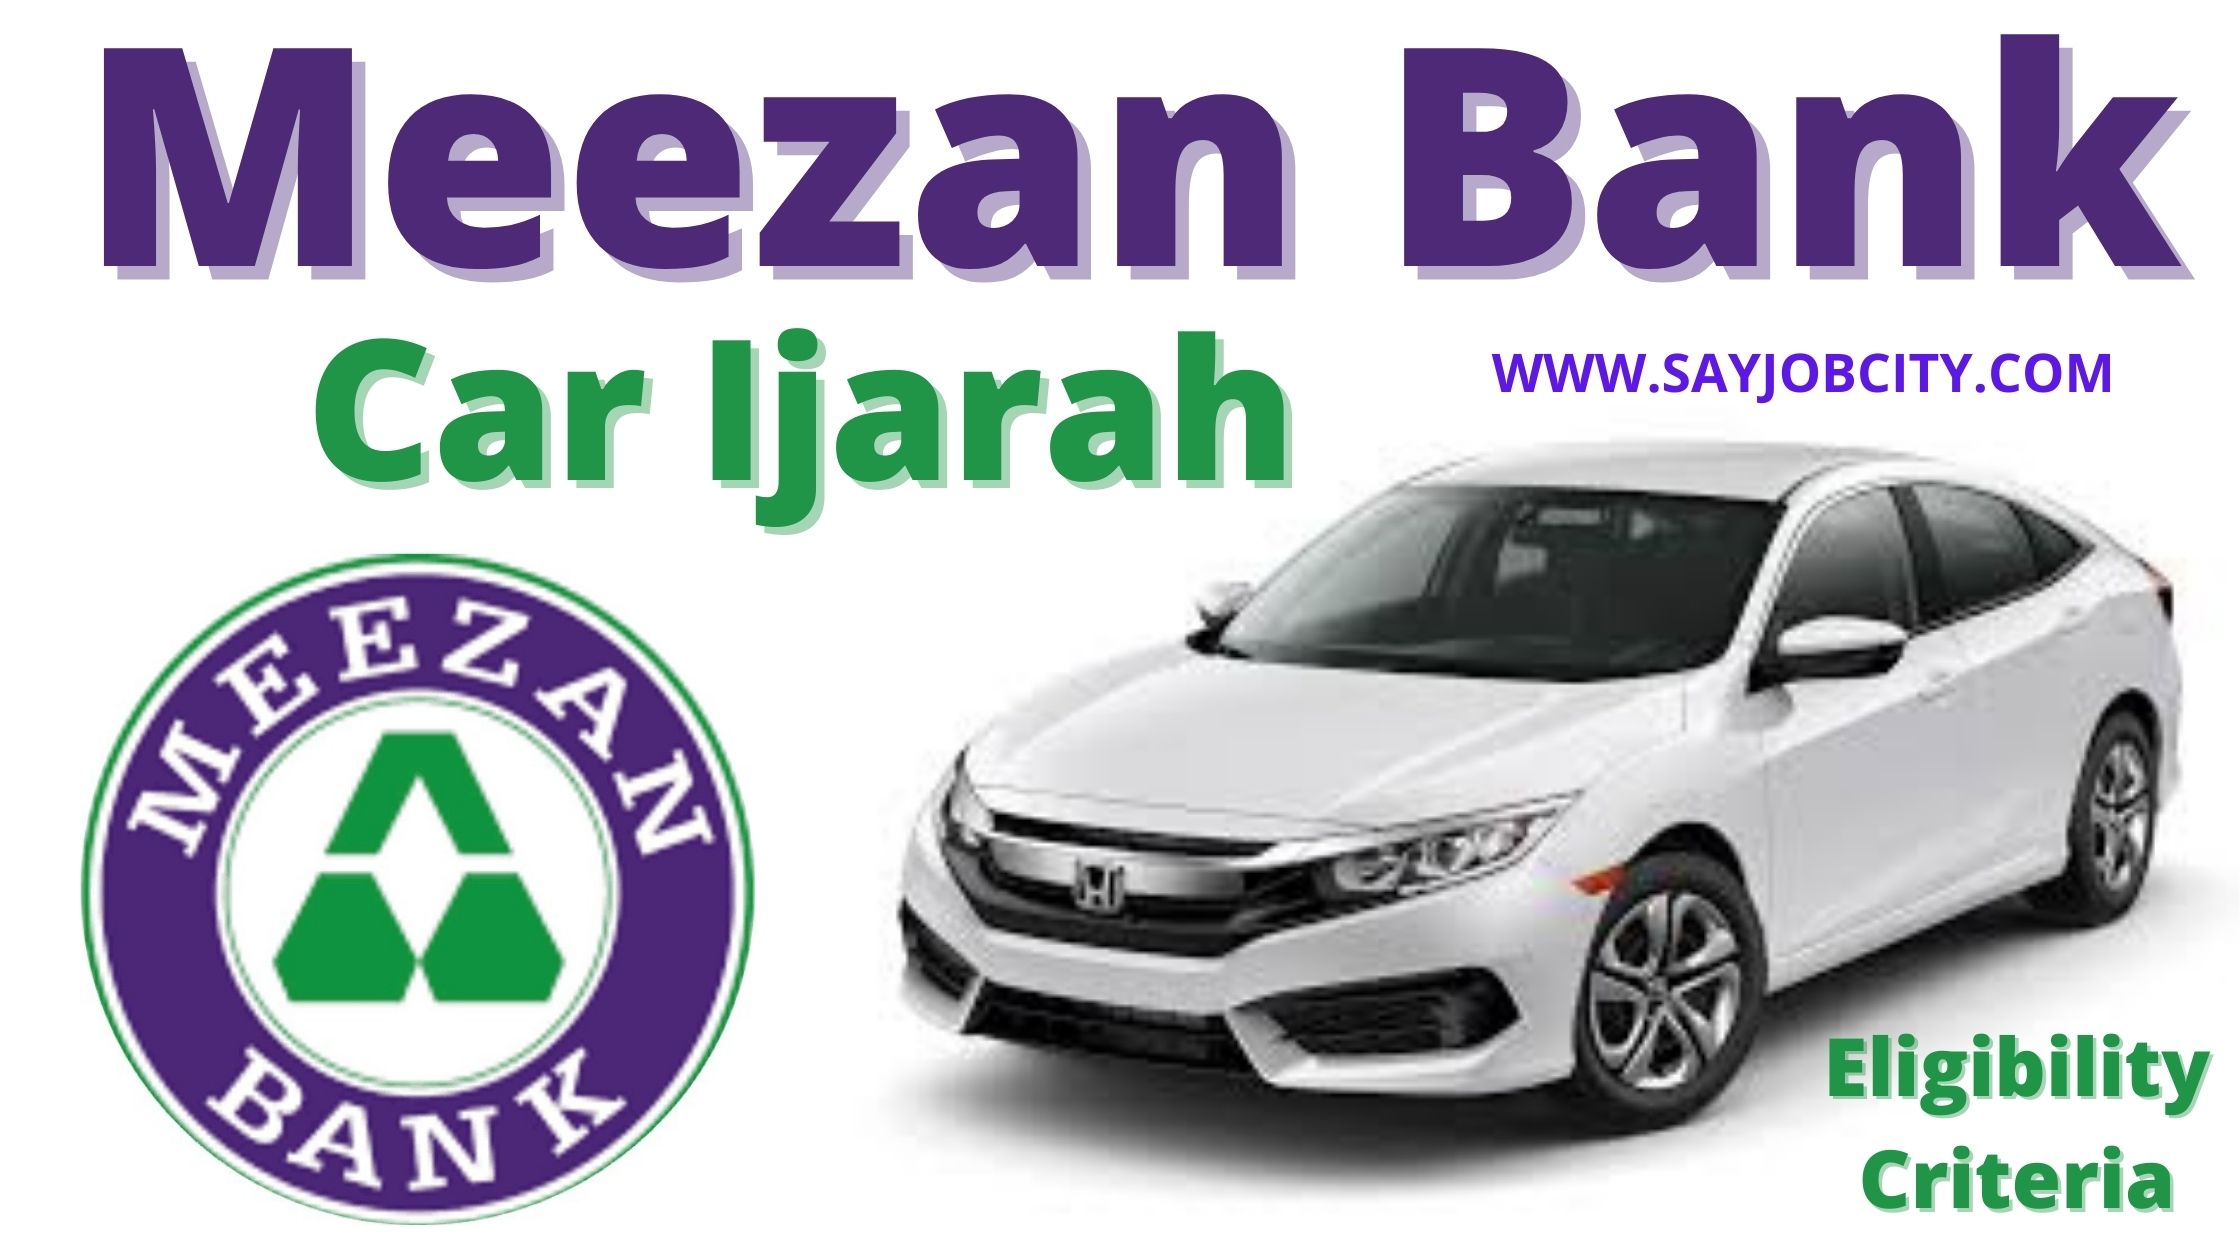 Meezan Bank Car Ijarah Eligibility Criteria (Car Financing)